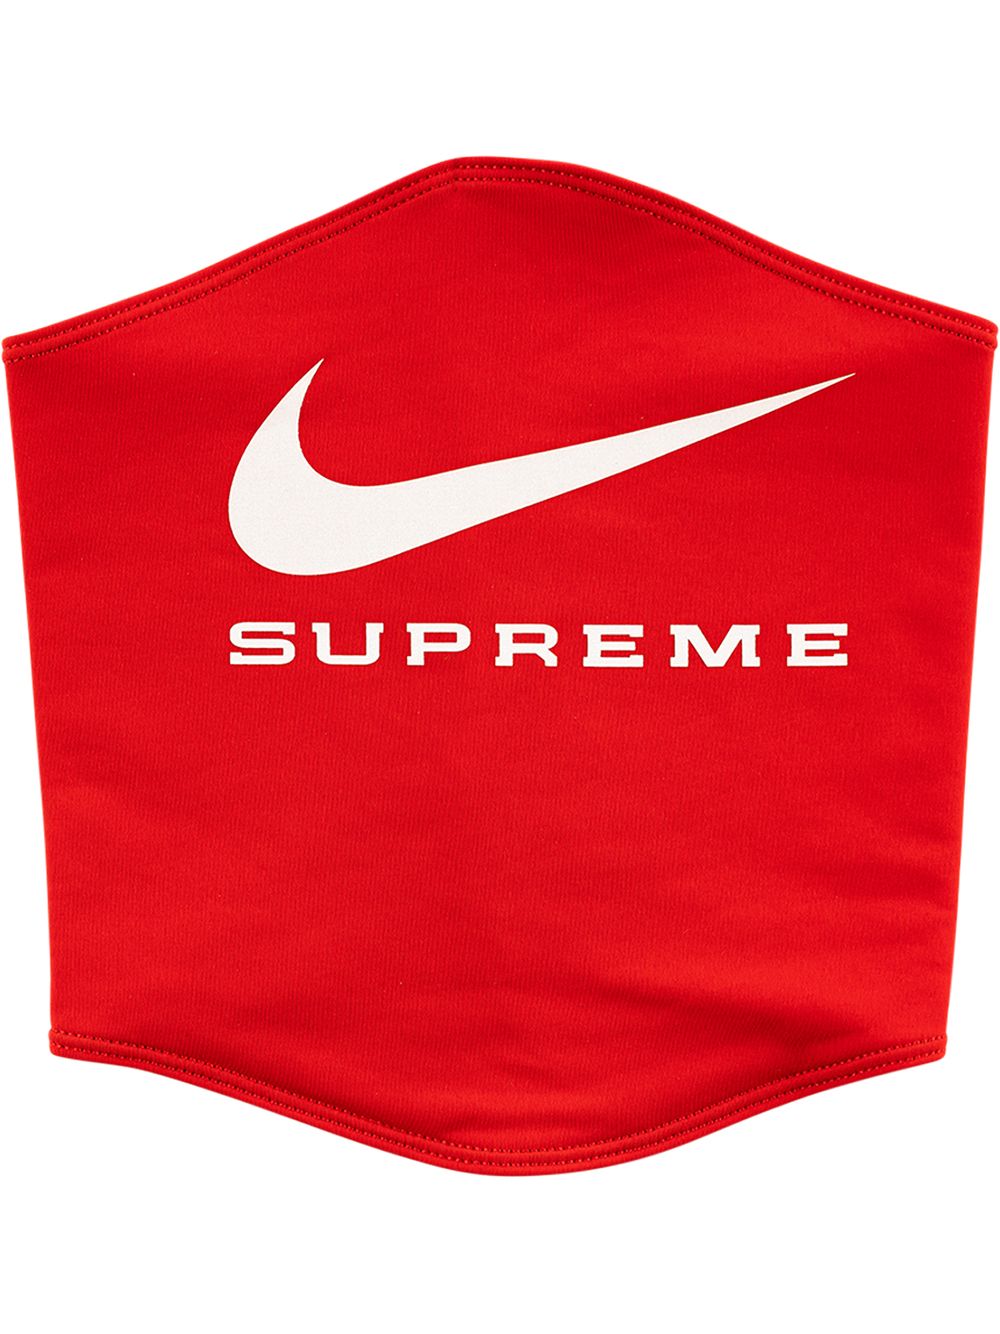 Supreme x Nike neck warmer - Red von Supreme